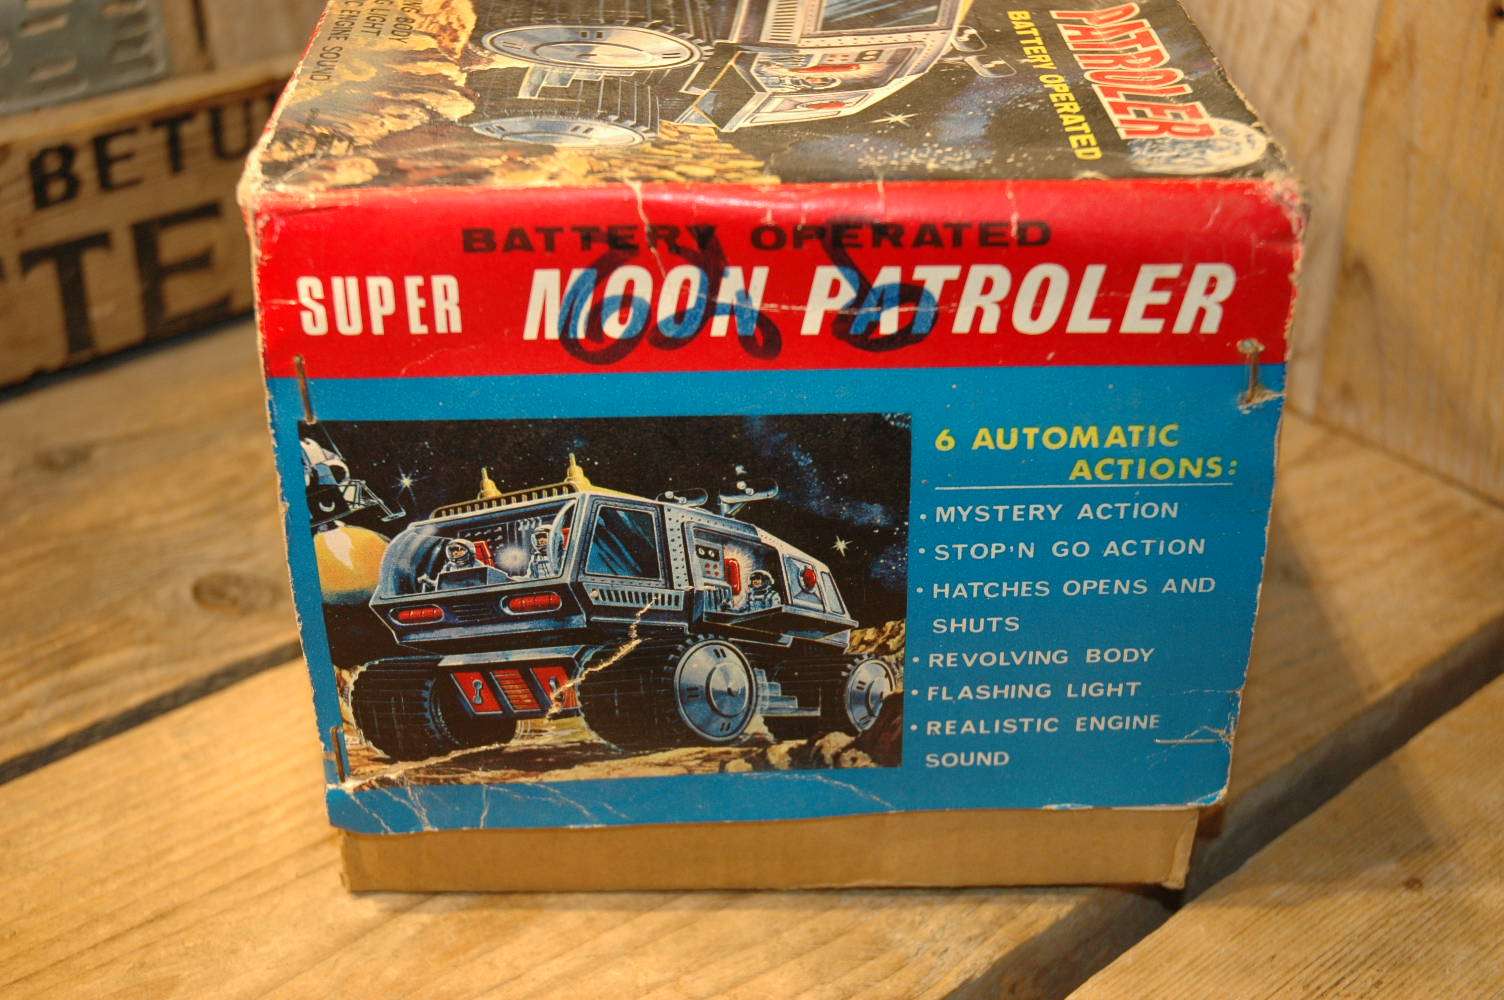 Junior Toys - Super Moon Patroler